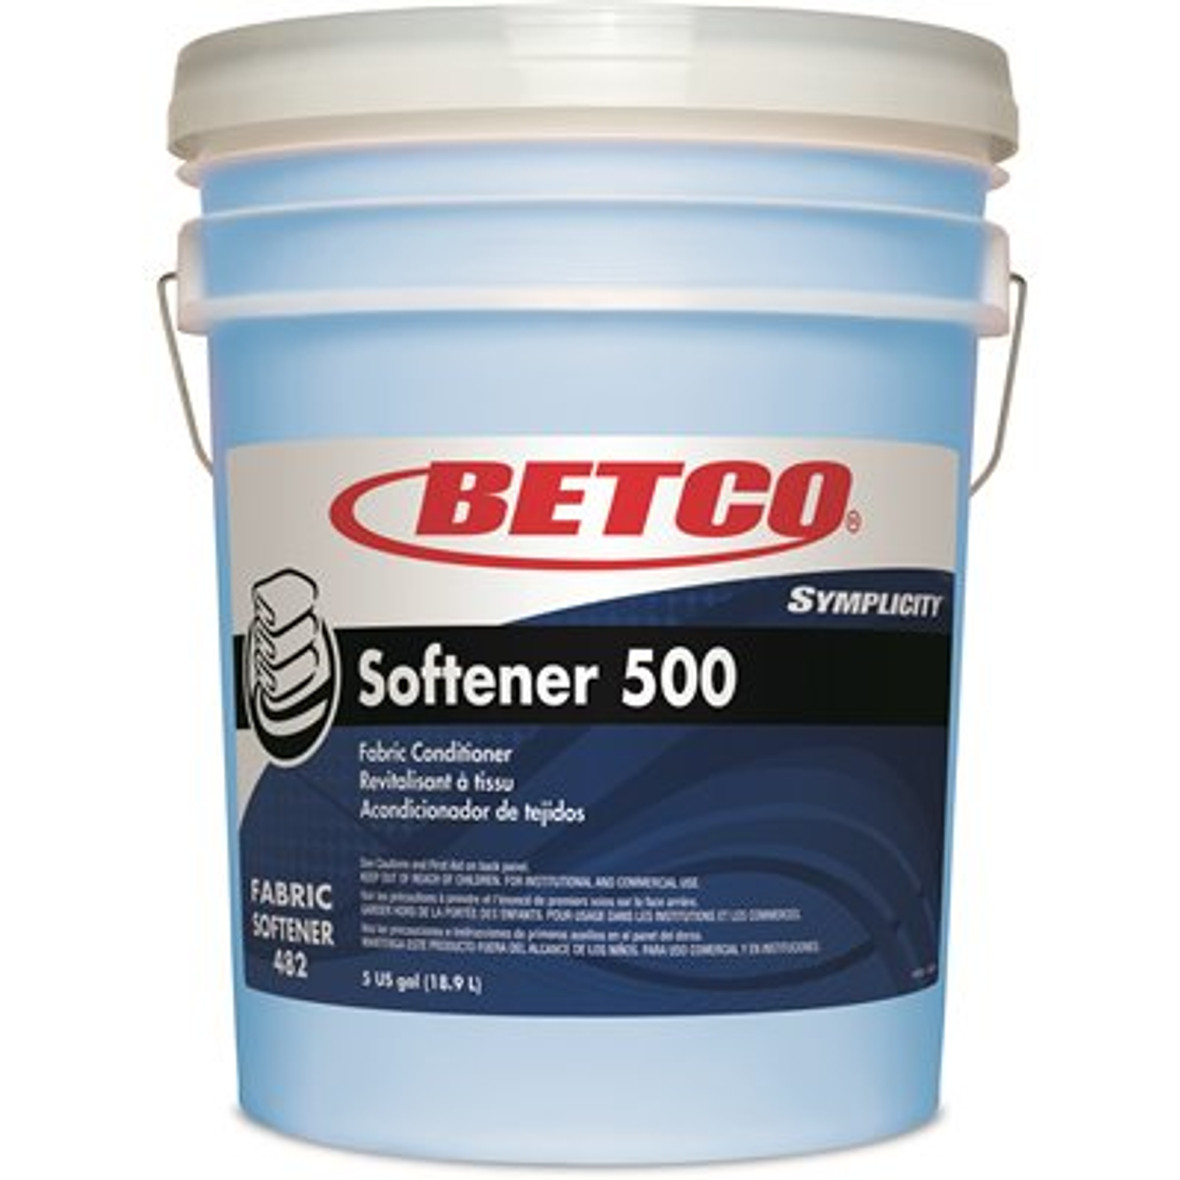 Betco Symplicity Softener Fabric Softener, 5 Gallon Pail